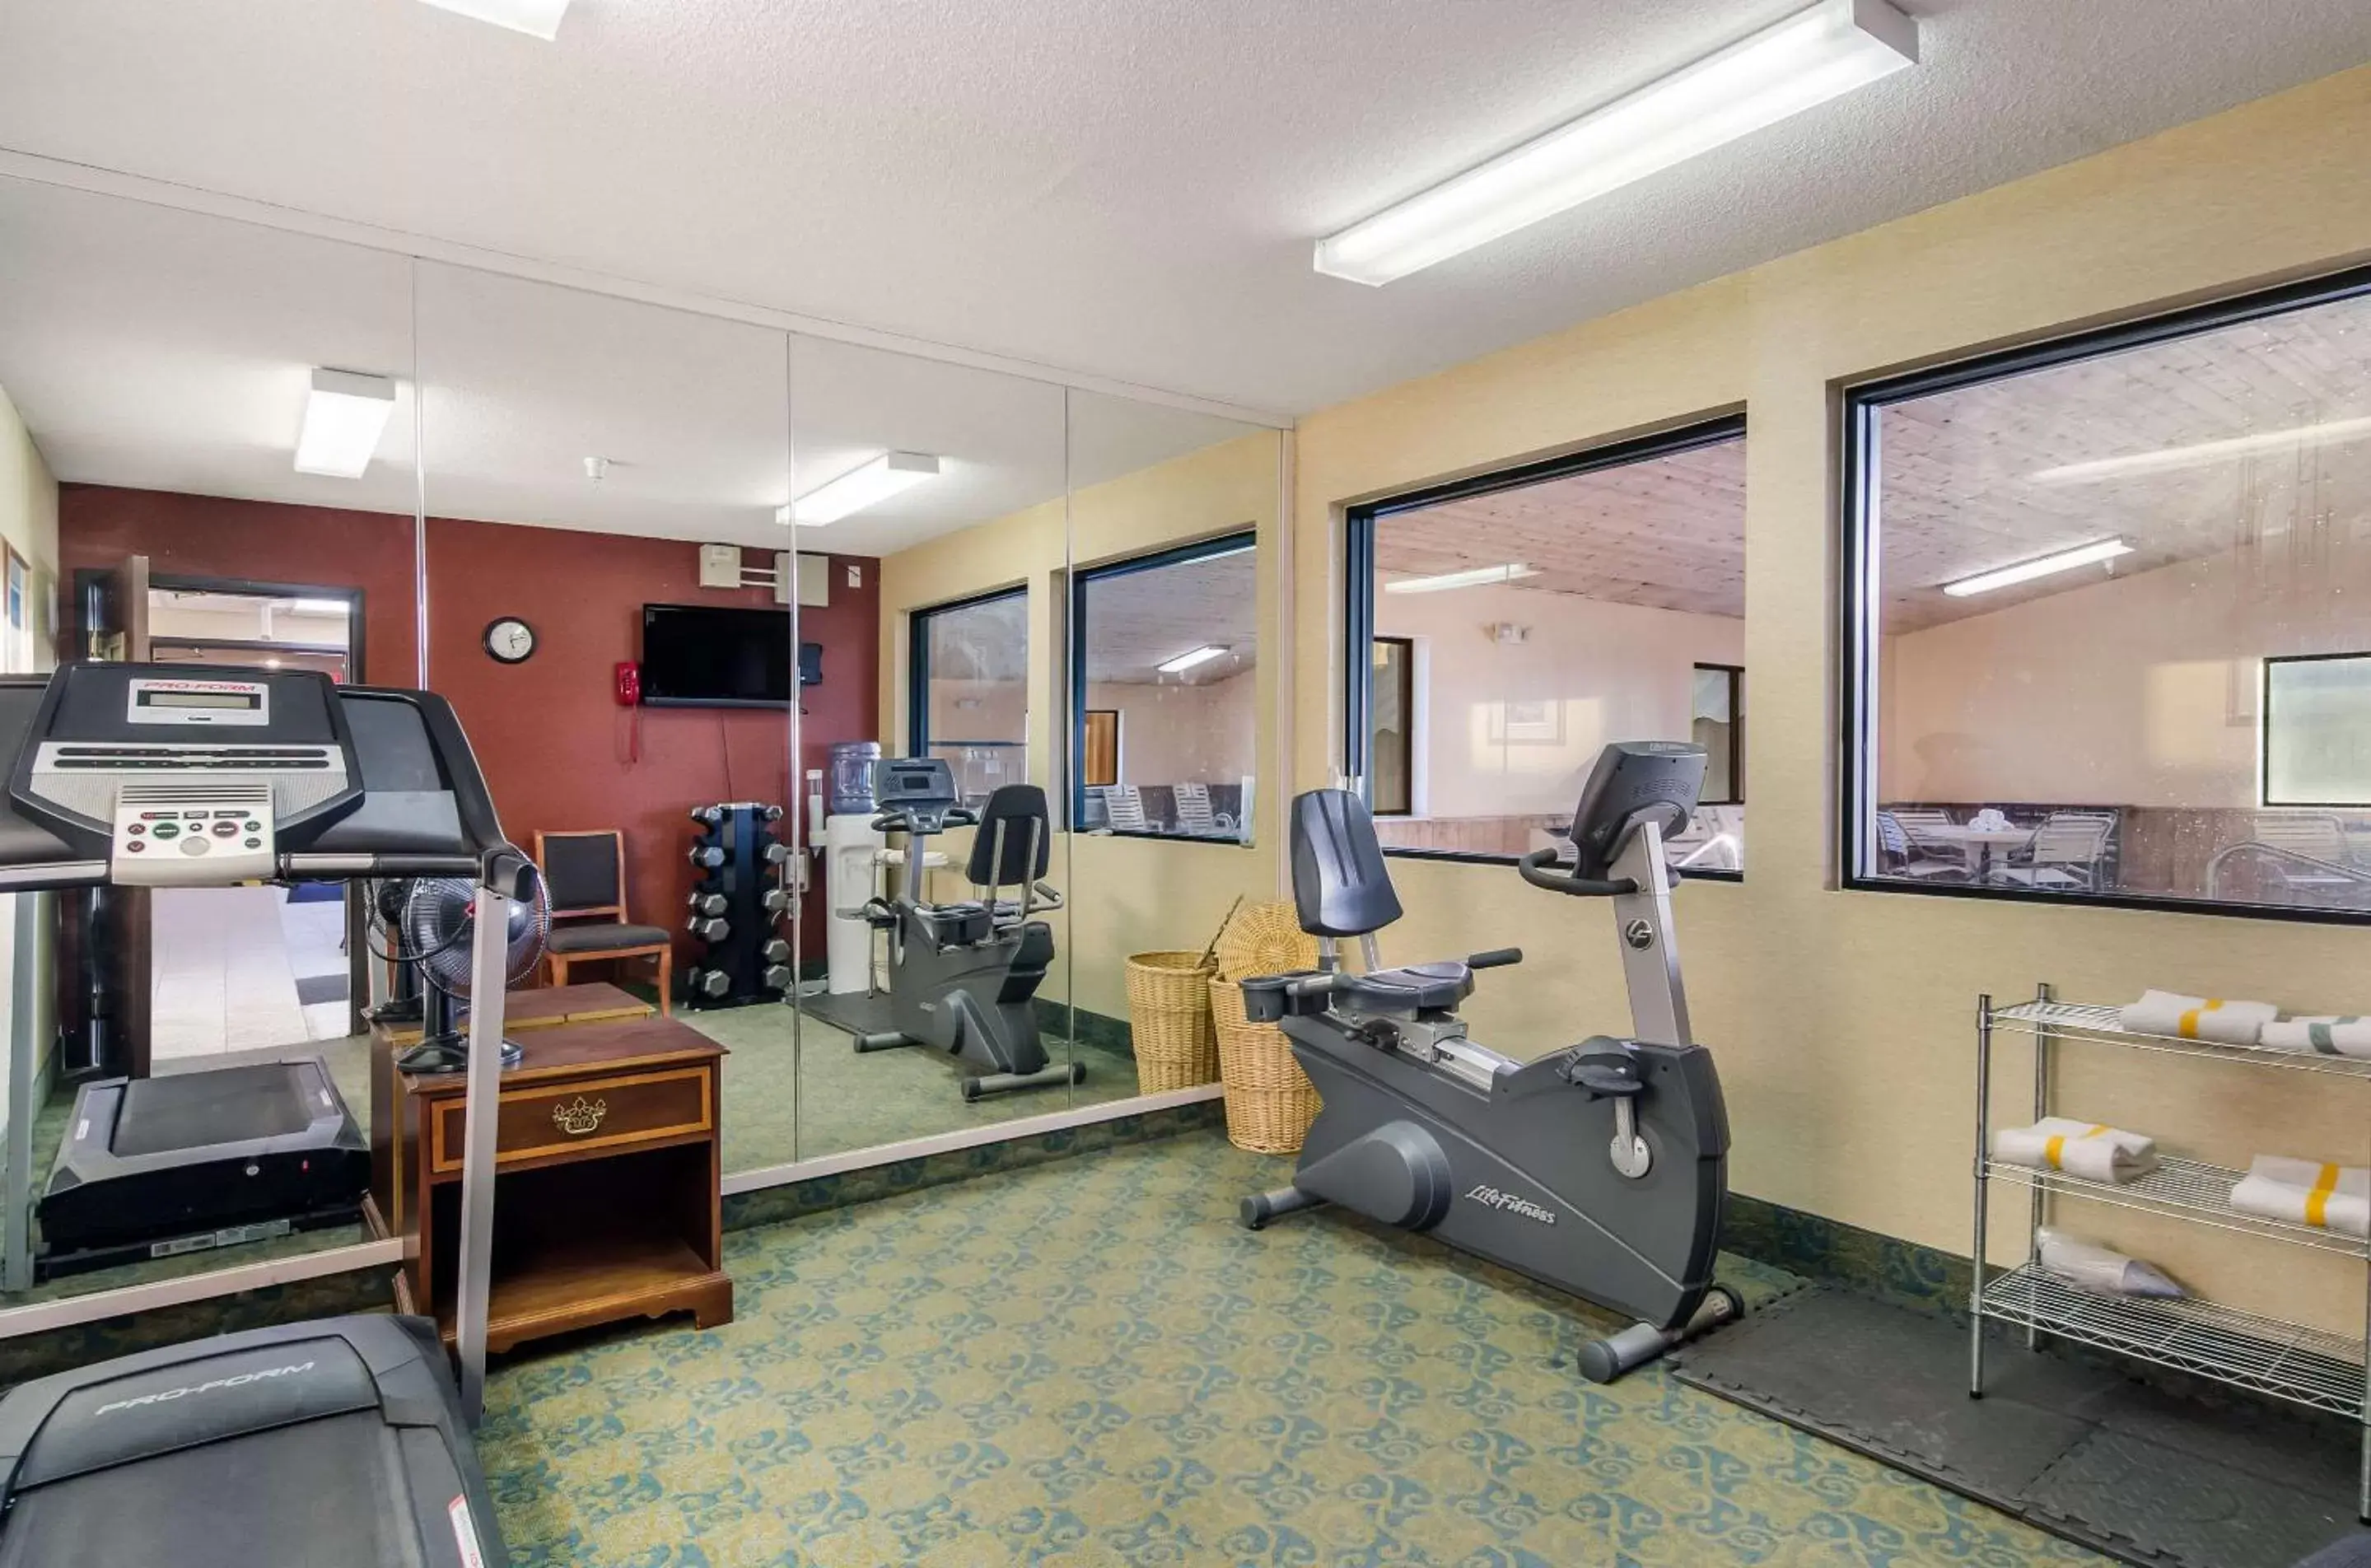 Fitness centre/facilities, Fitness Center/Facilities in Quality Inn Goodland, KS near Northwest Kansas Technical College